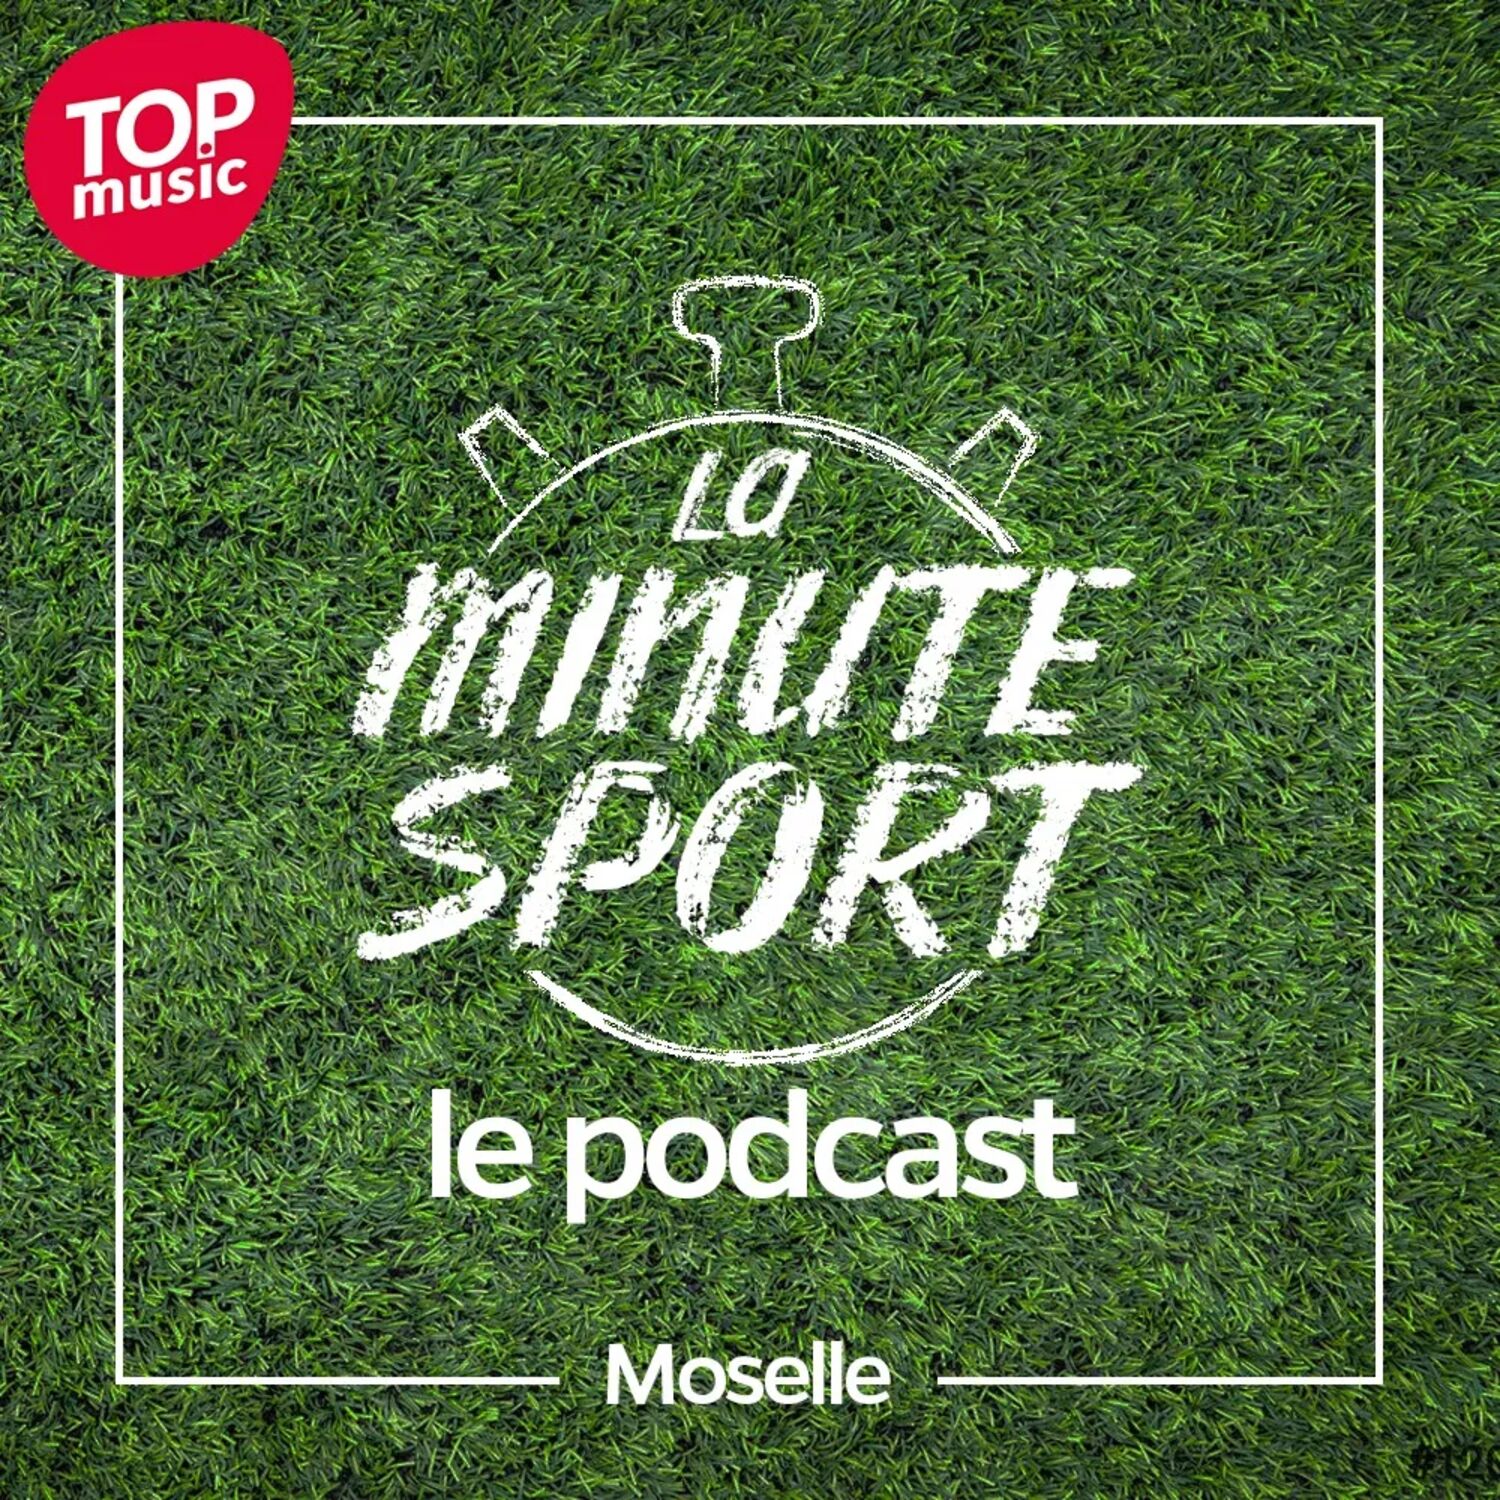 La Minute Sport - Moselle - EP19